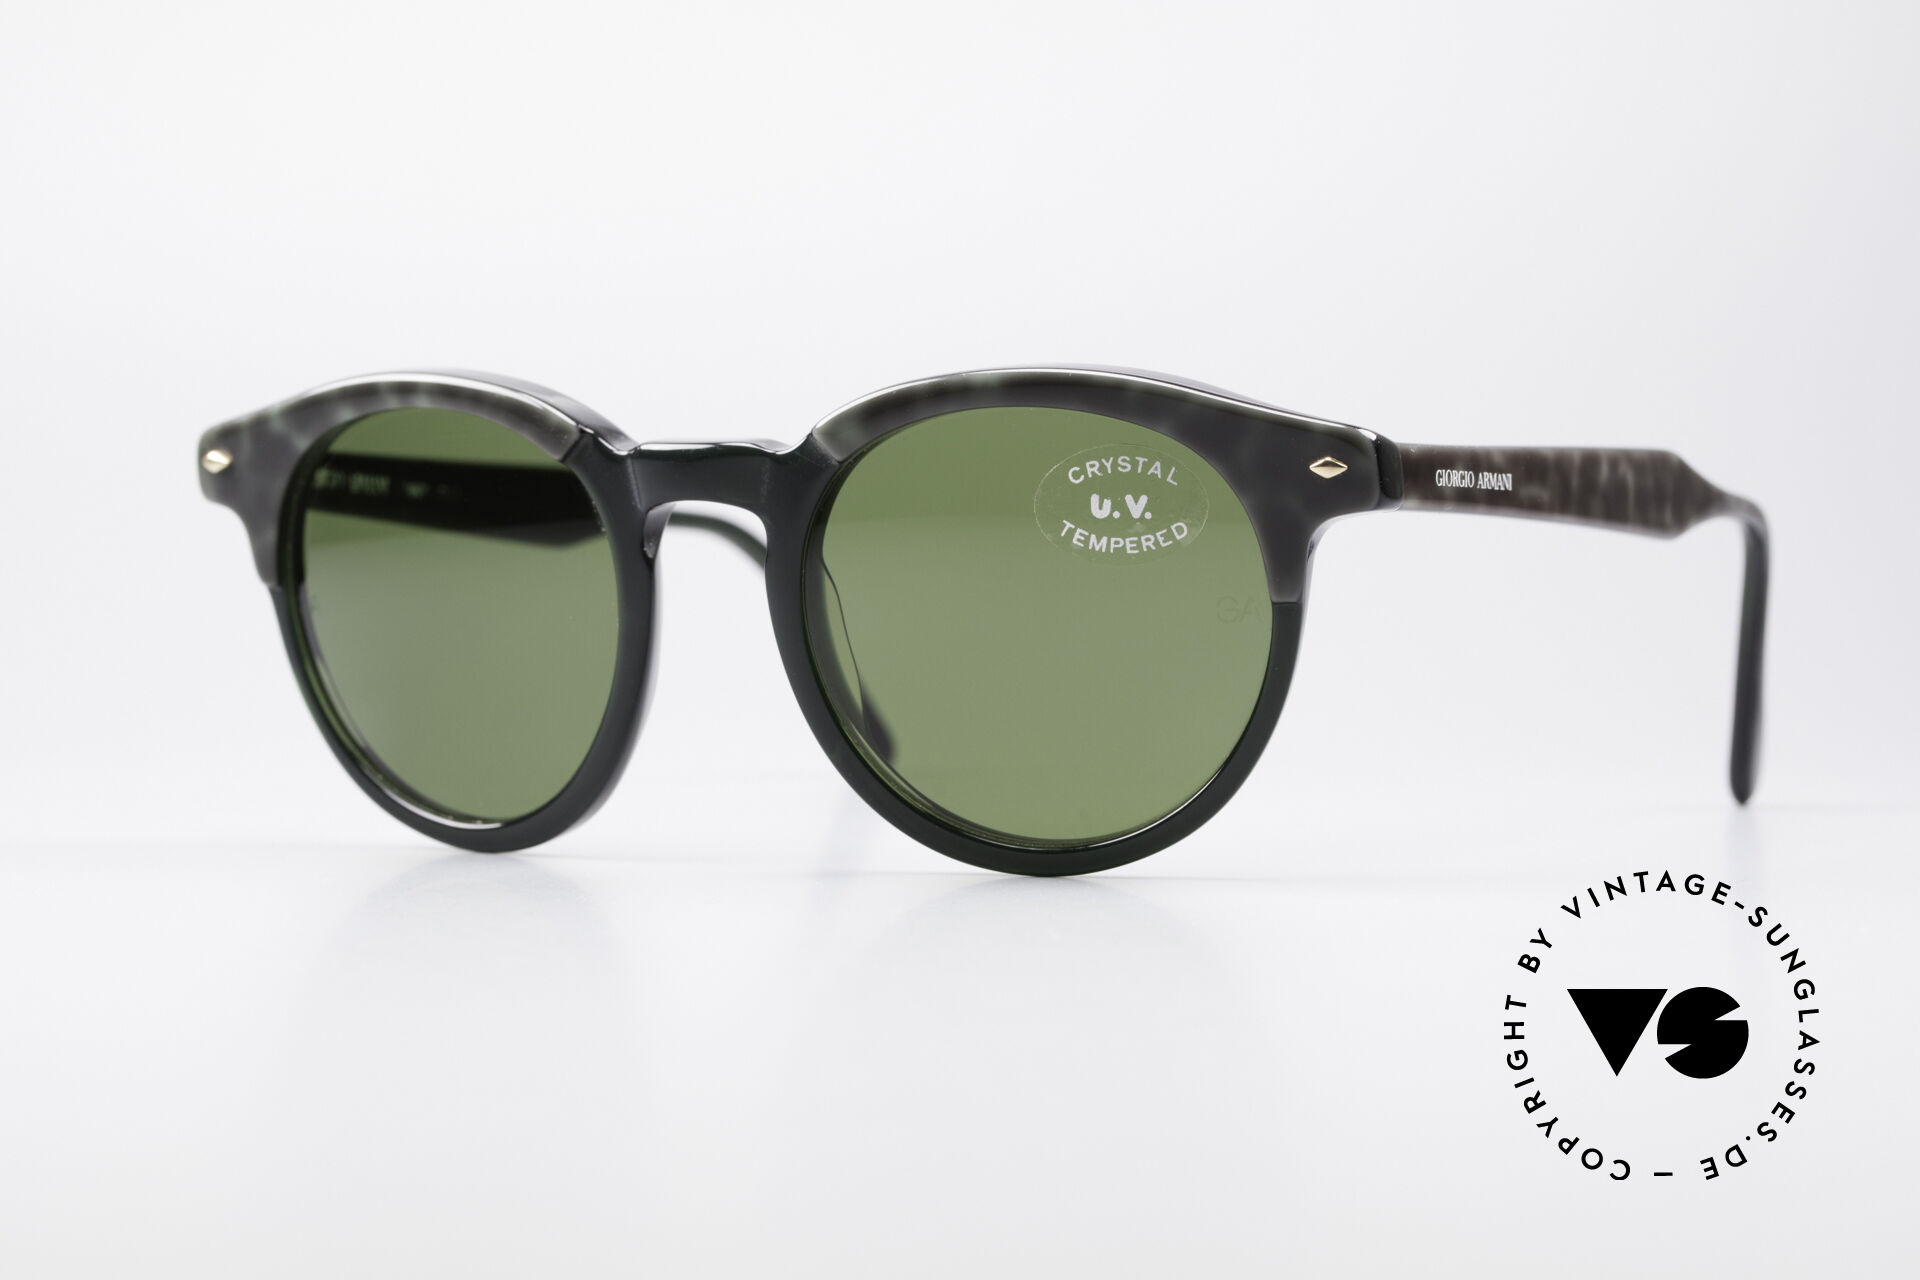 Giorgio Armani 901 Johnny Depp Sunglasses